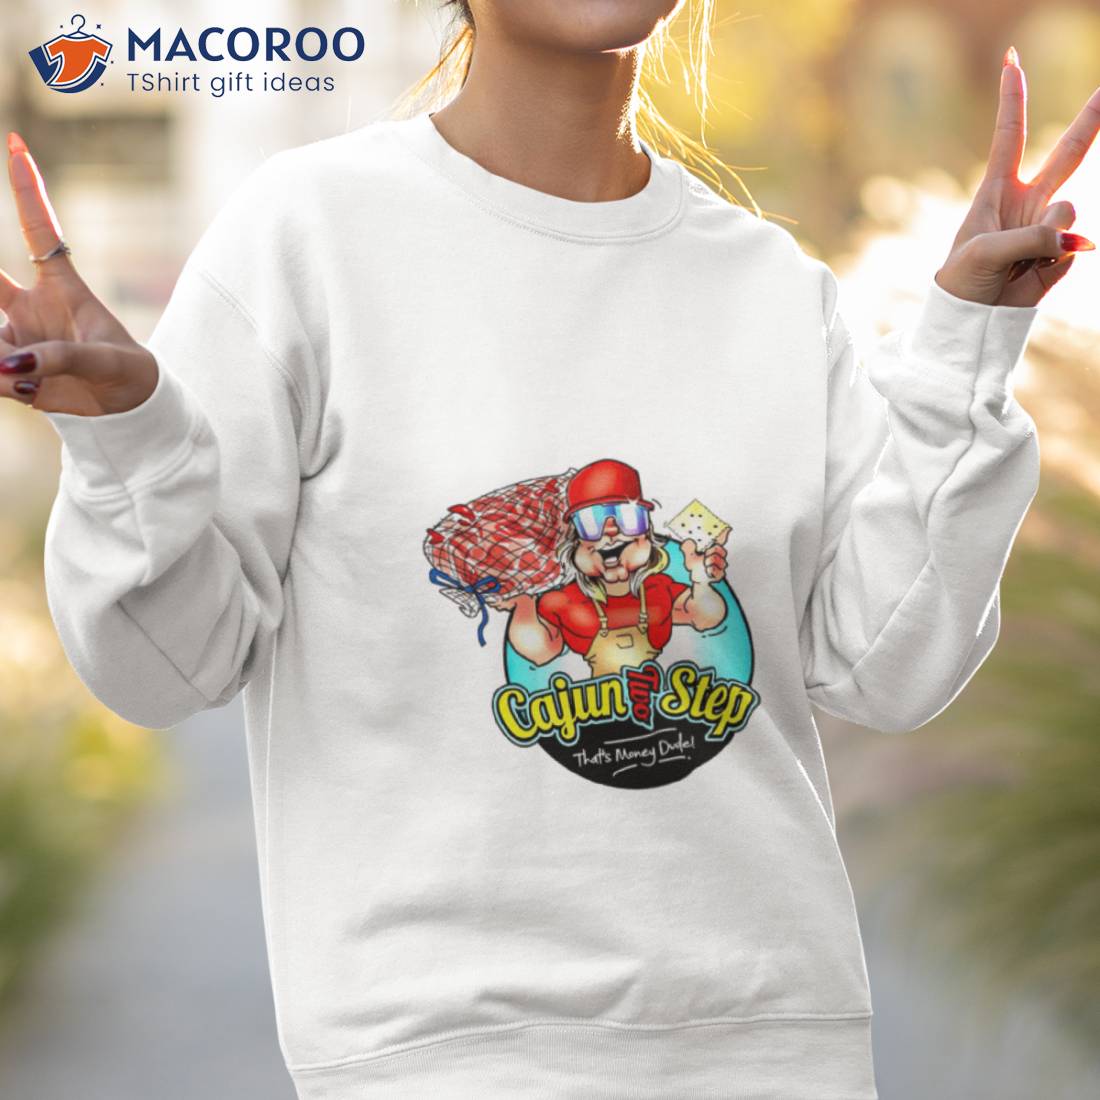 https://images.macoroo.com/wp-content/uploads/2023/07/cajun-two-step-thats-money-dude-shirt-sweatshirt-2.jpg